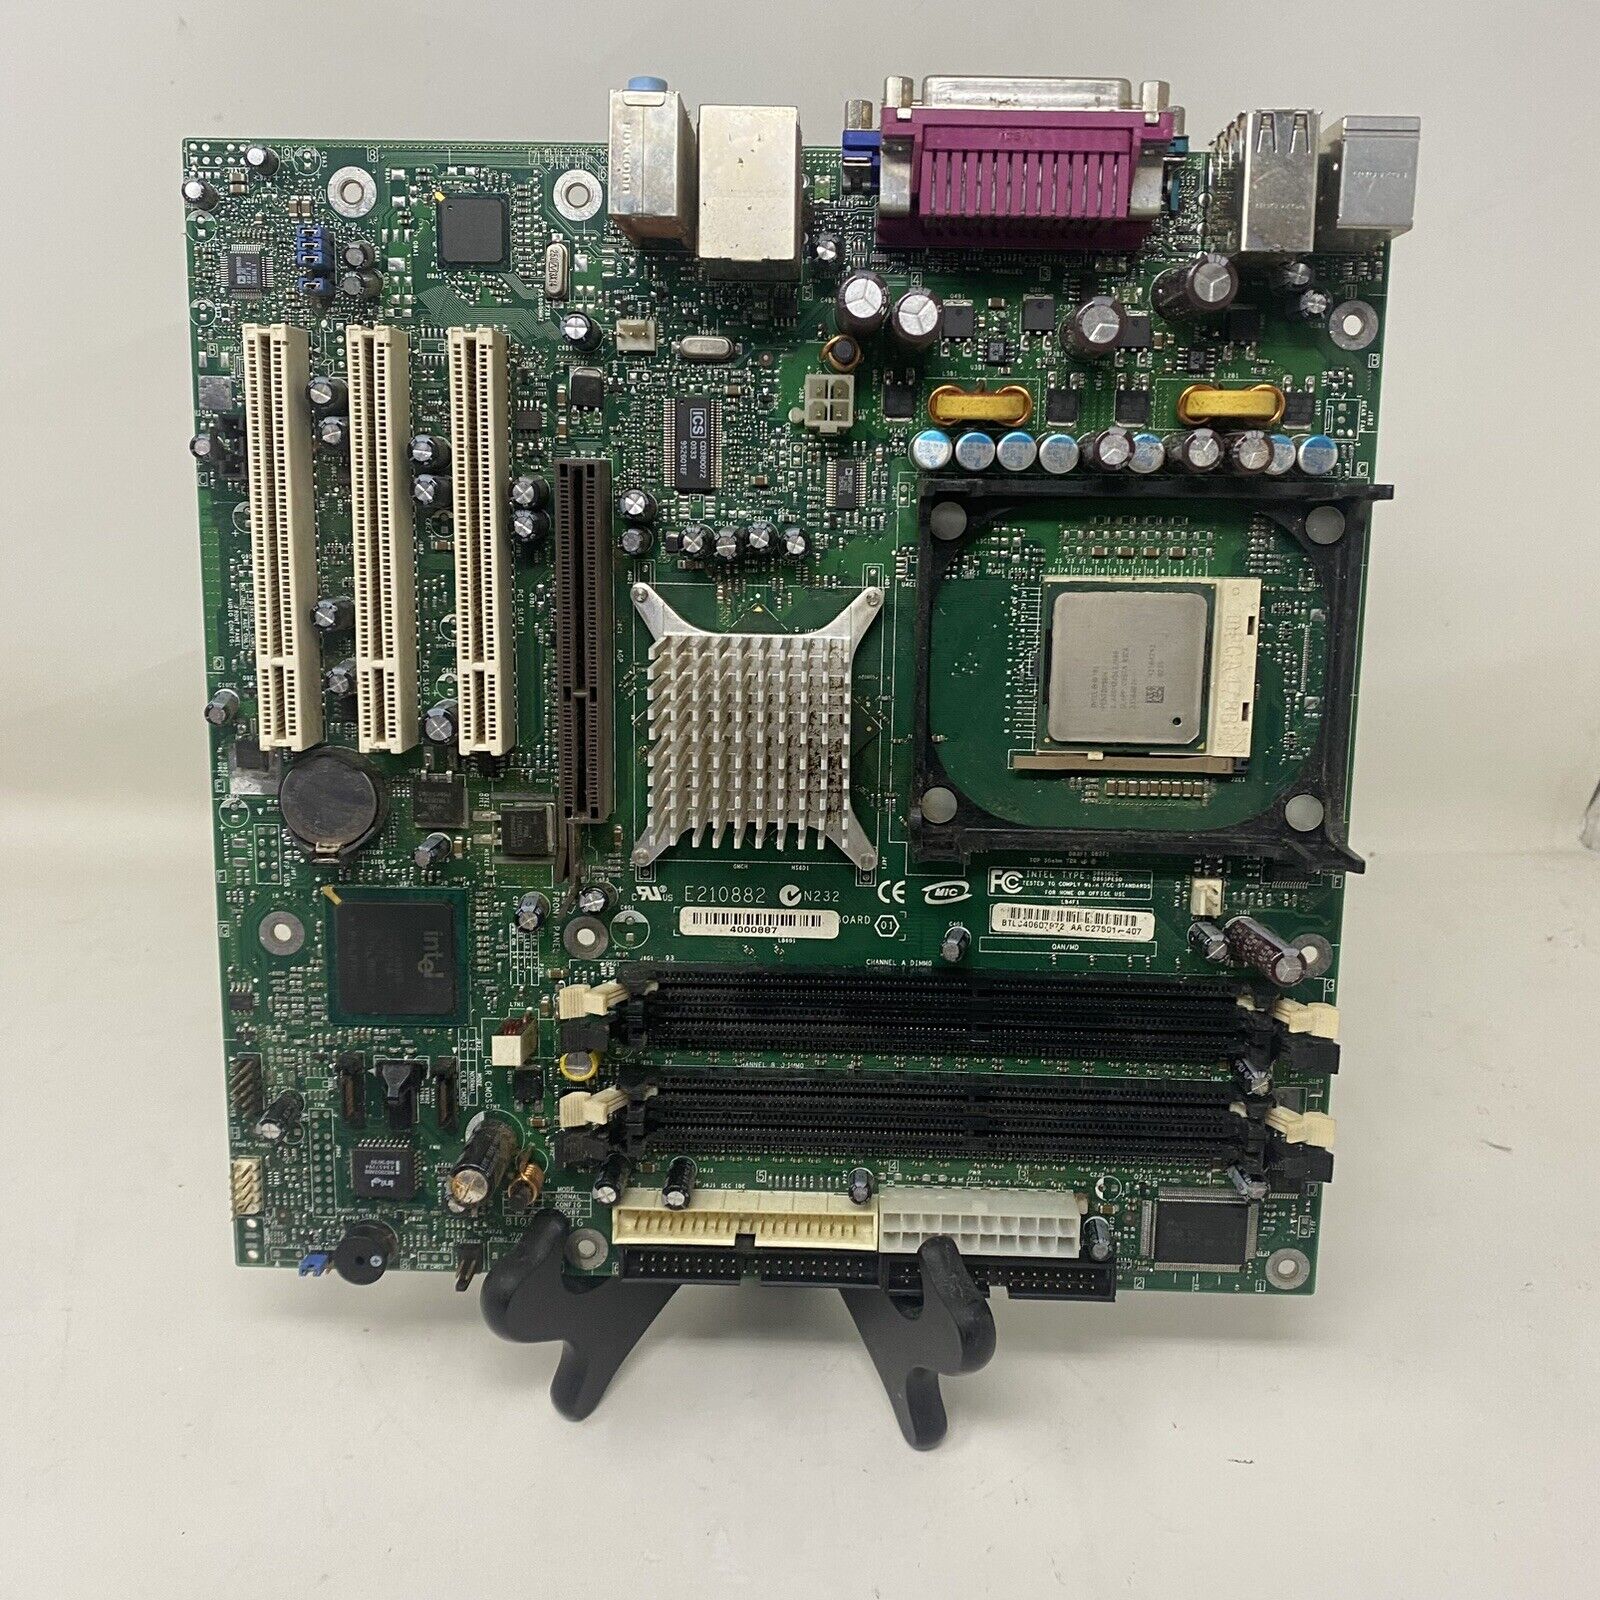 Intel E210882 Desktop Integrated Motherboard Intel Pentium 4 2.6GHz 2x 256mb DDR